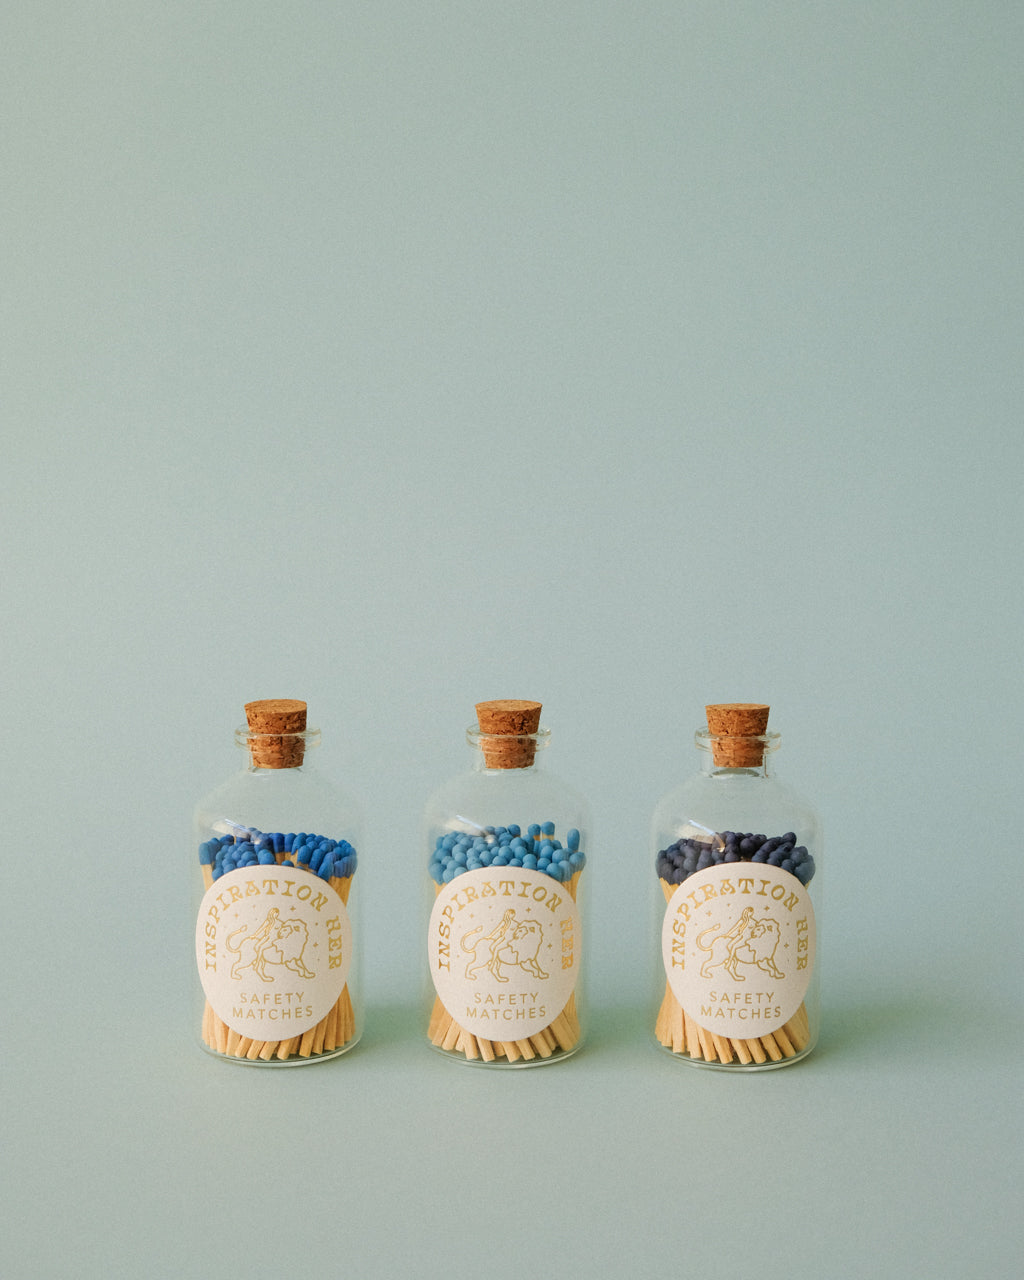 Decorative Safety Matches in a Glass Jar - Denim | Inspiration Her